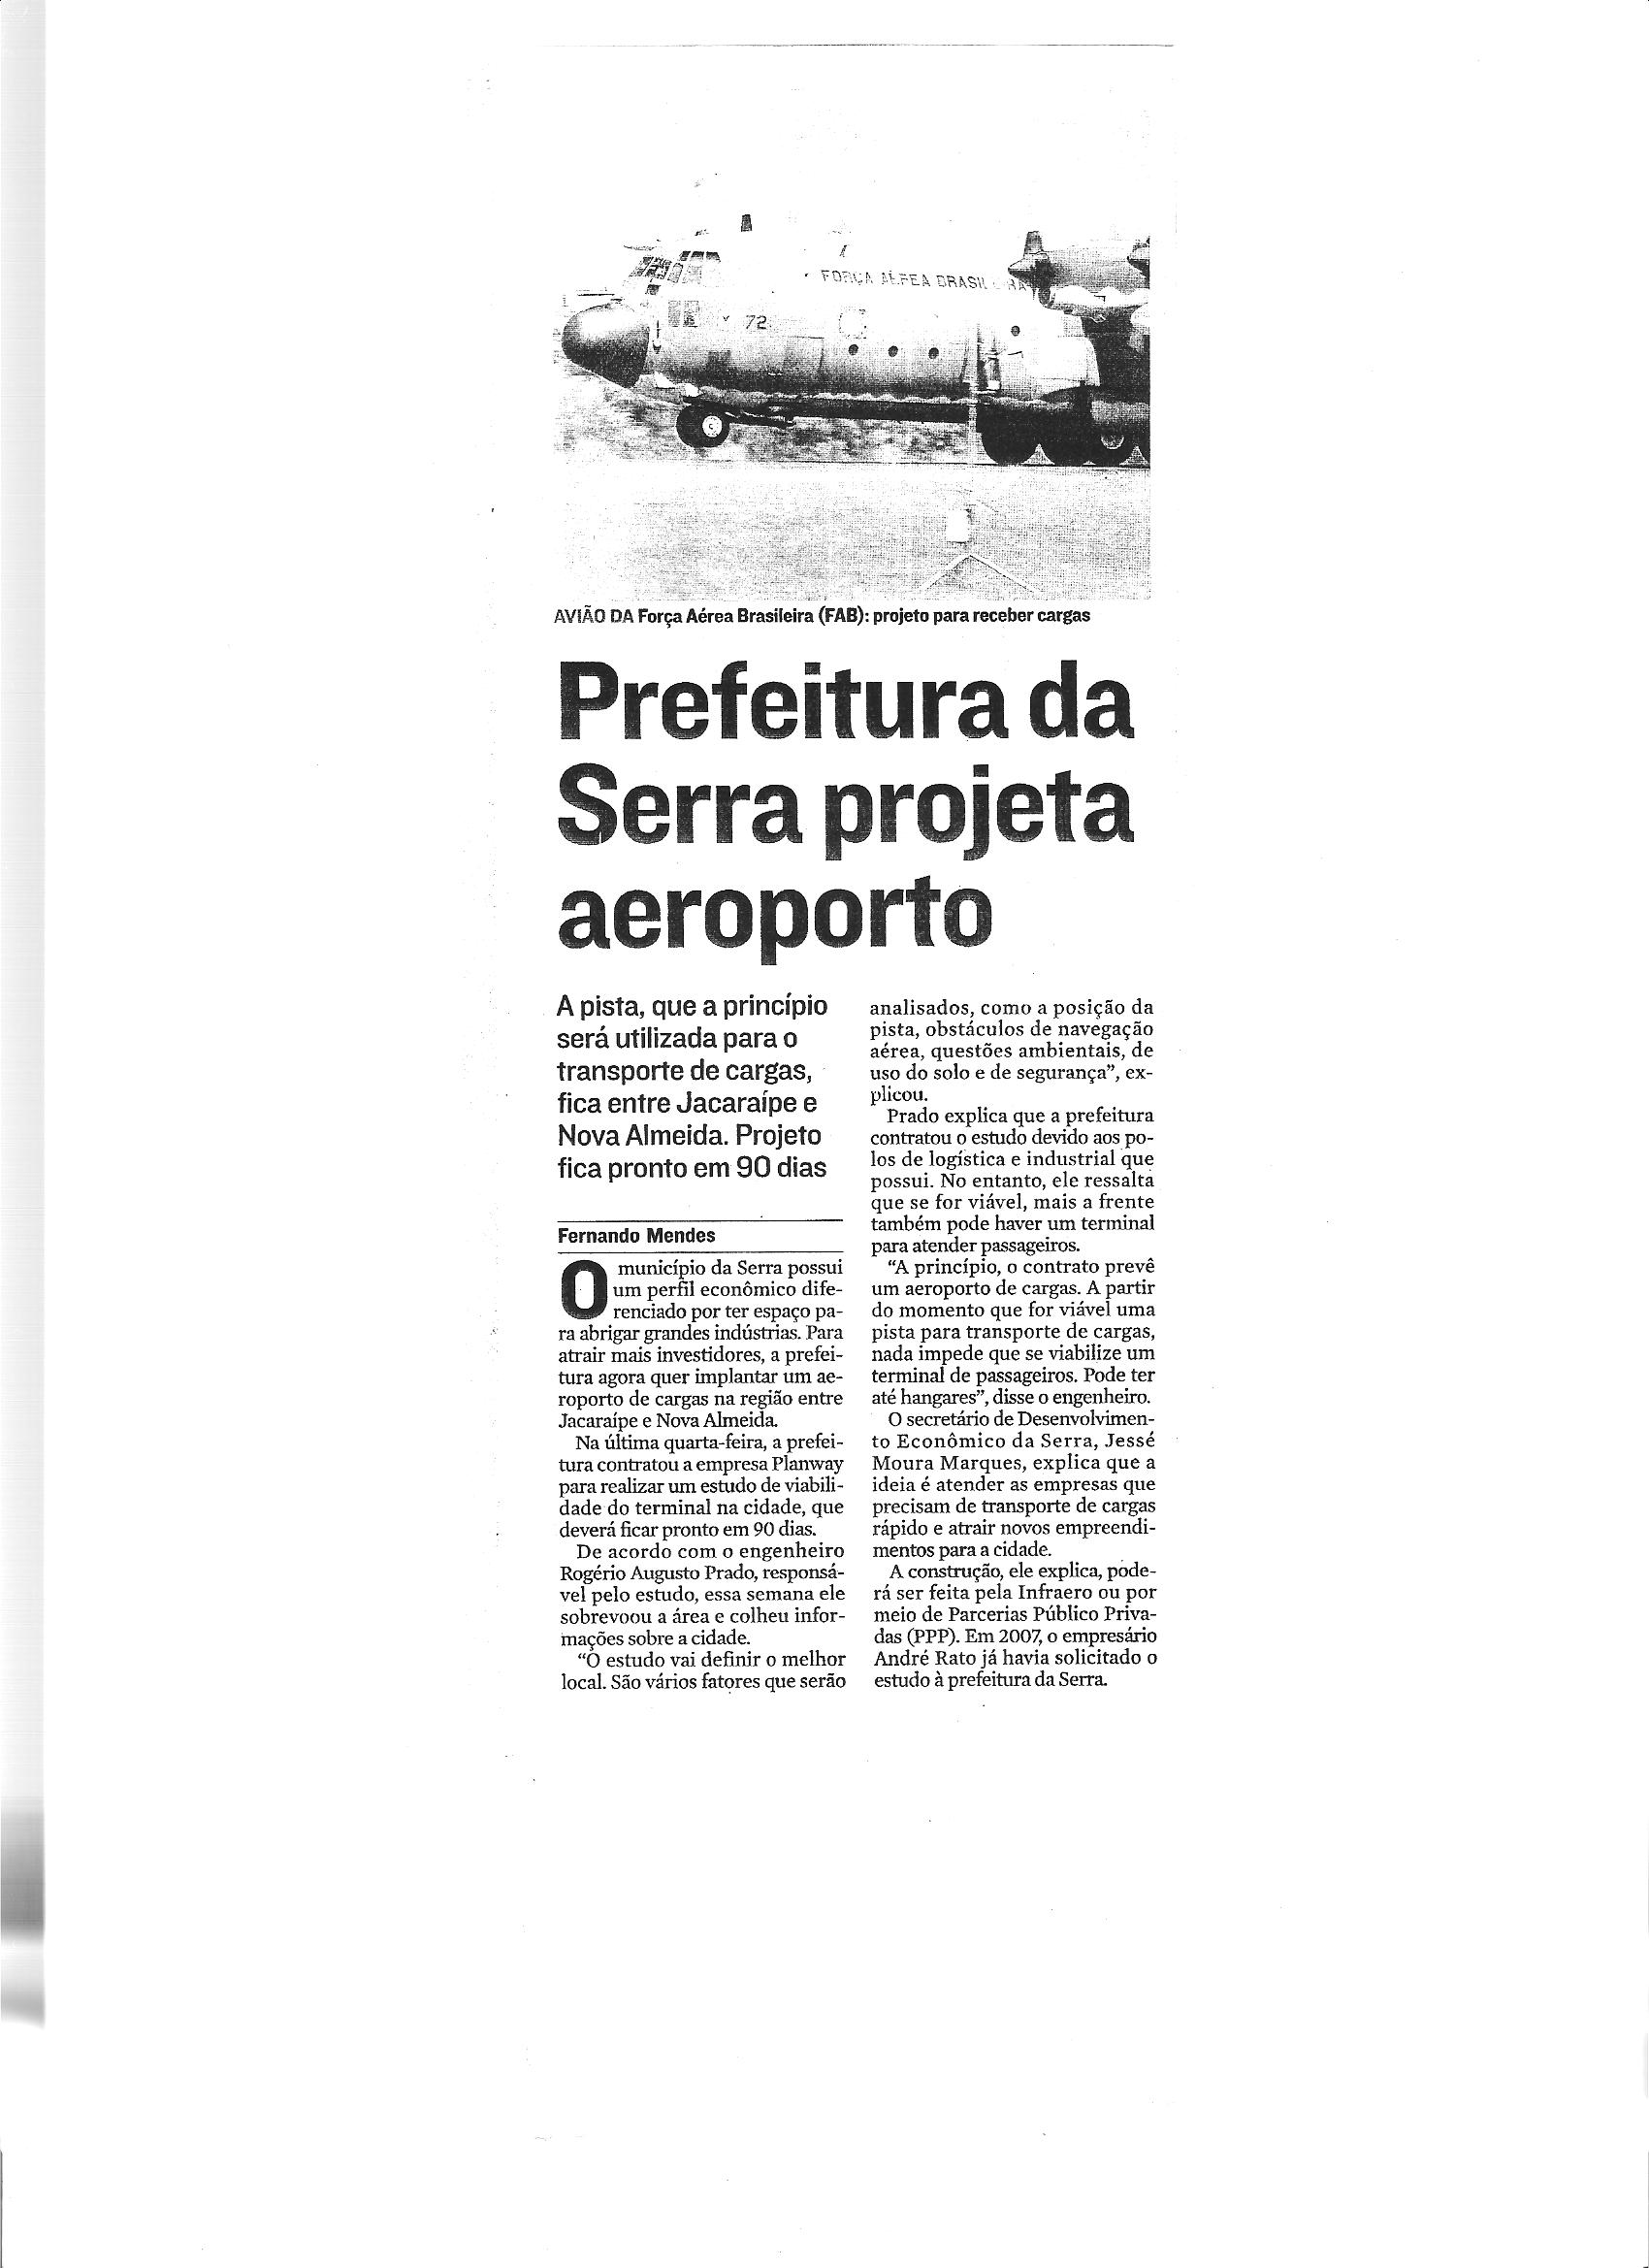 Economia - Prefeitura da Serra projeta aeroporto